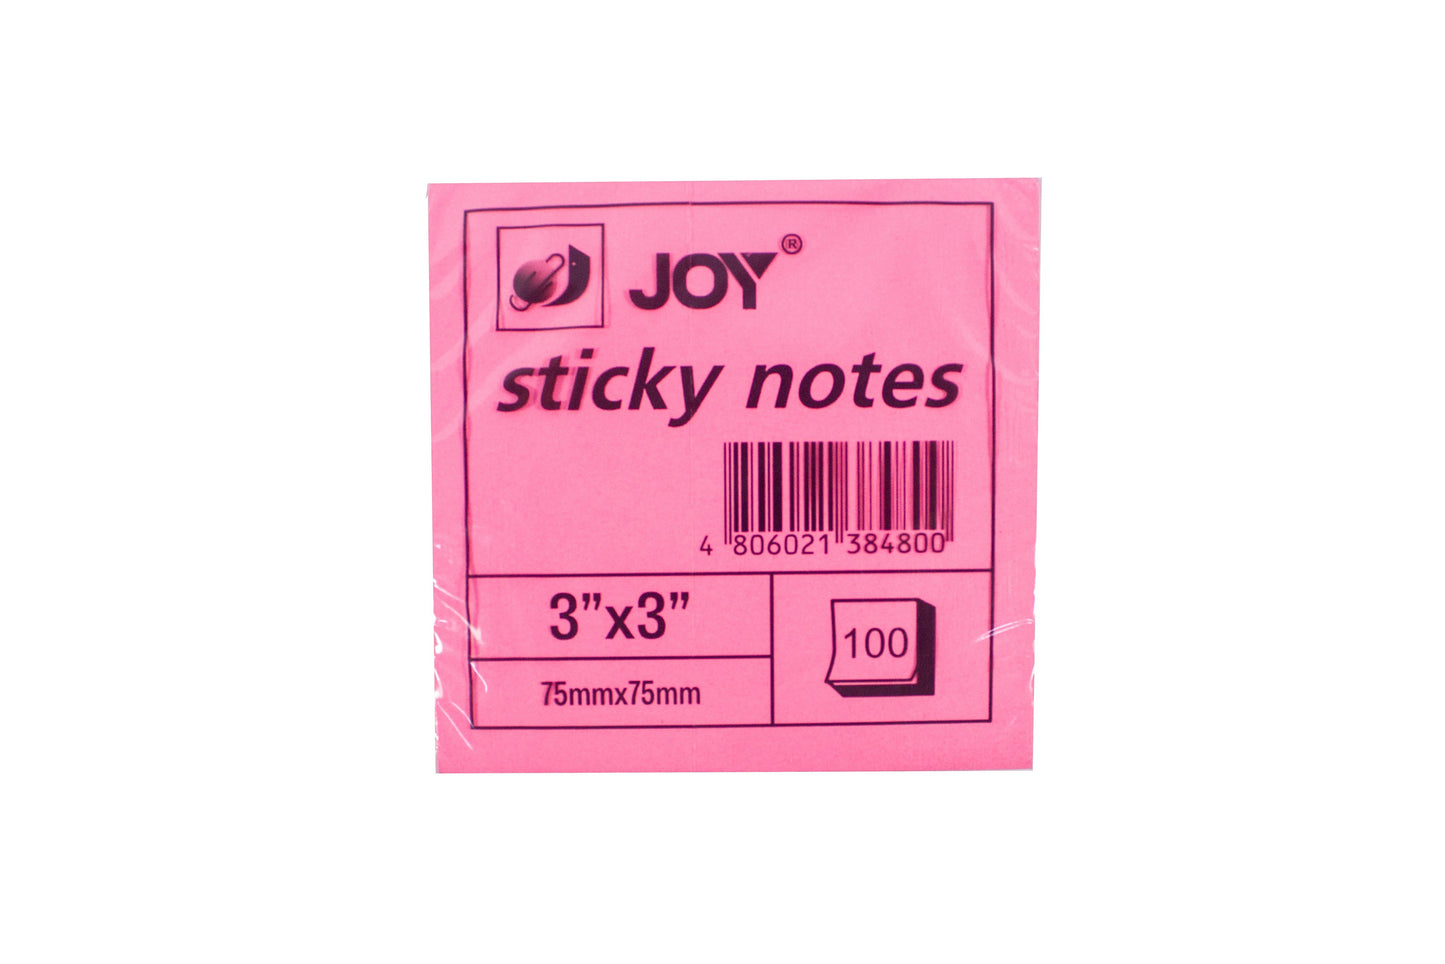 Joy Sticky Note 3inx3in 100 sheets